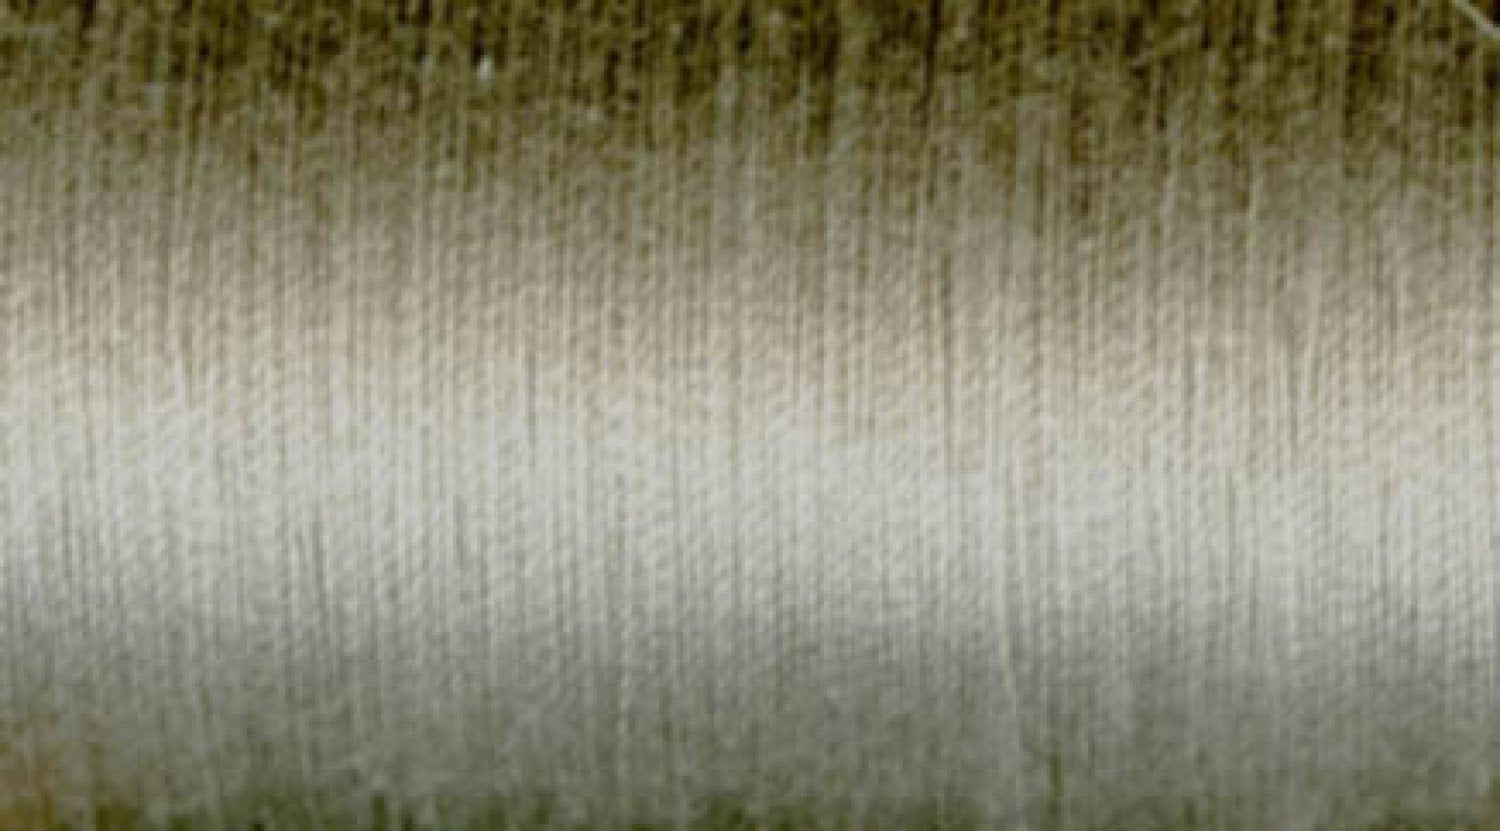 Illuminating Organic Cotton Sewing Thread-4803